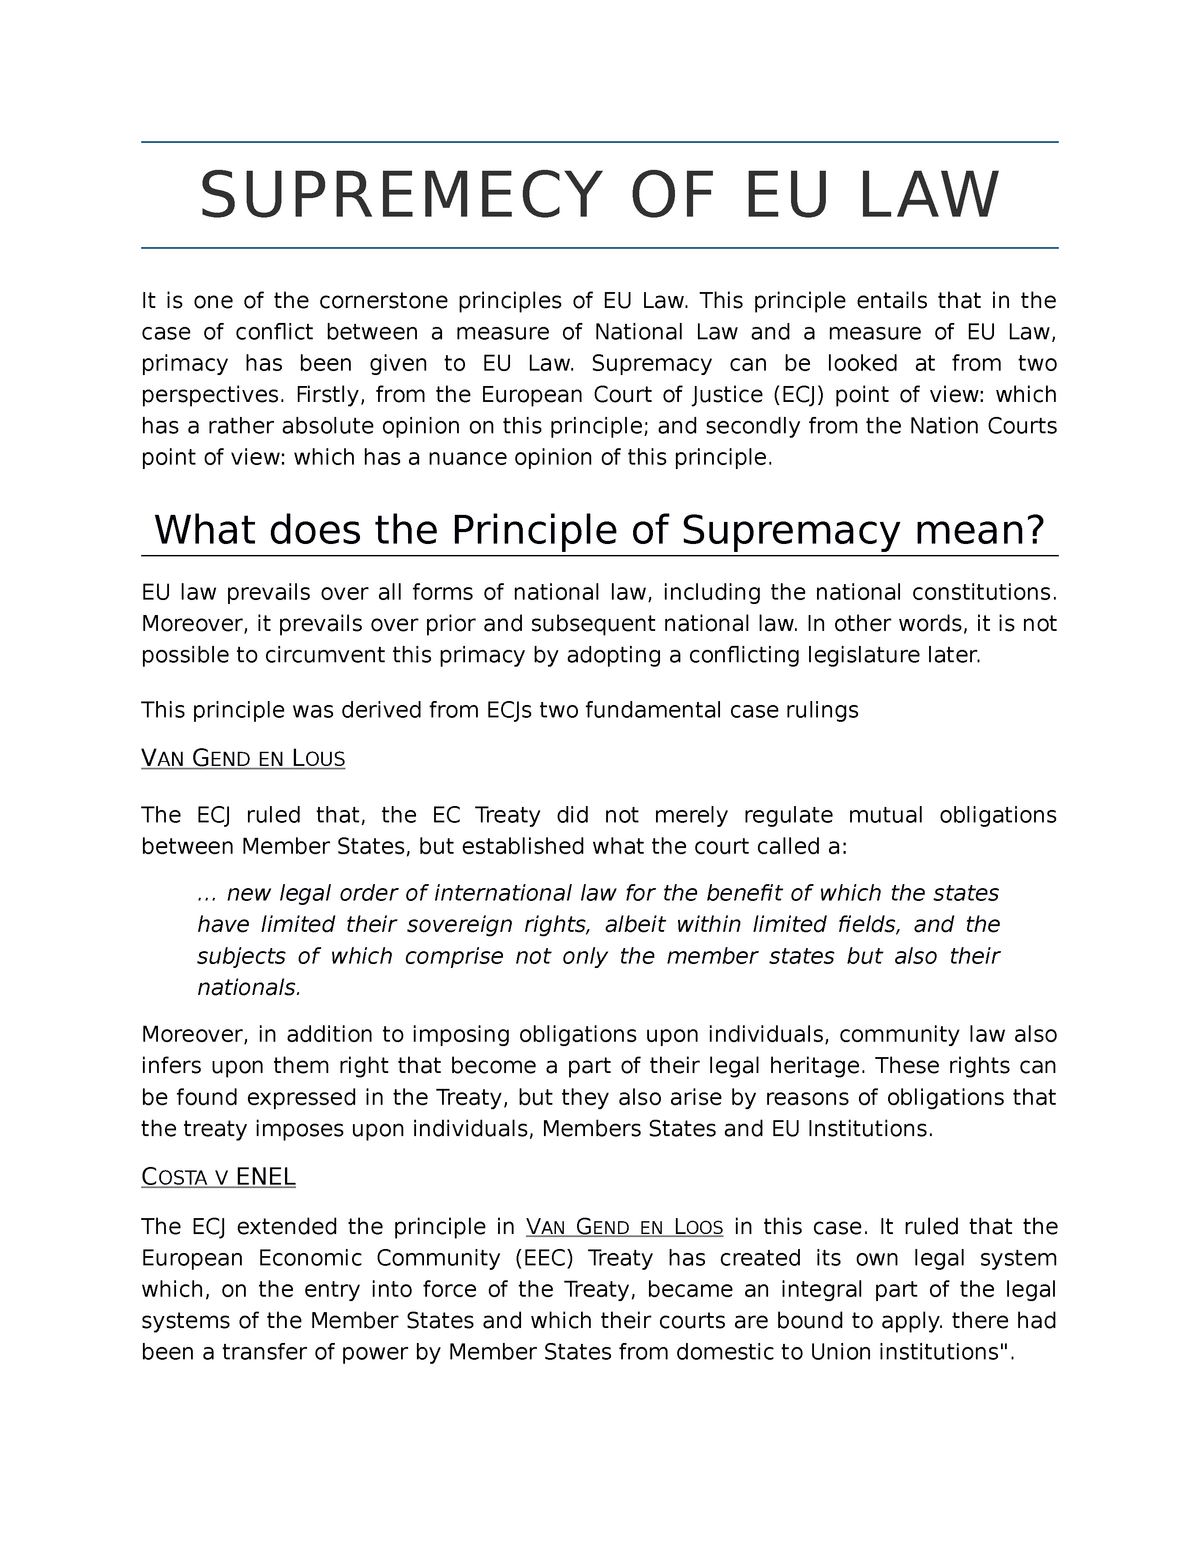 supremacy of eu law essay